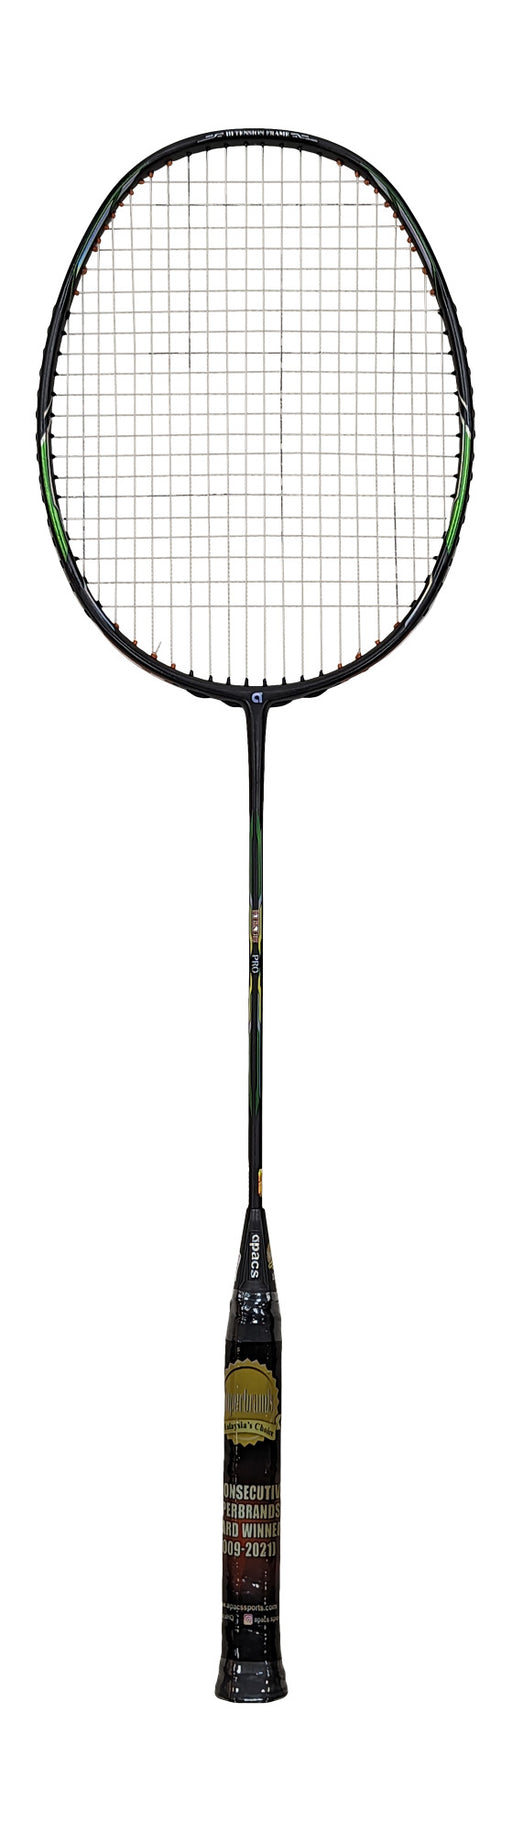 Badminton Warehouse Badminton Rackets Pickleball Paddles